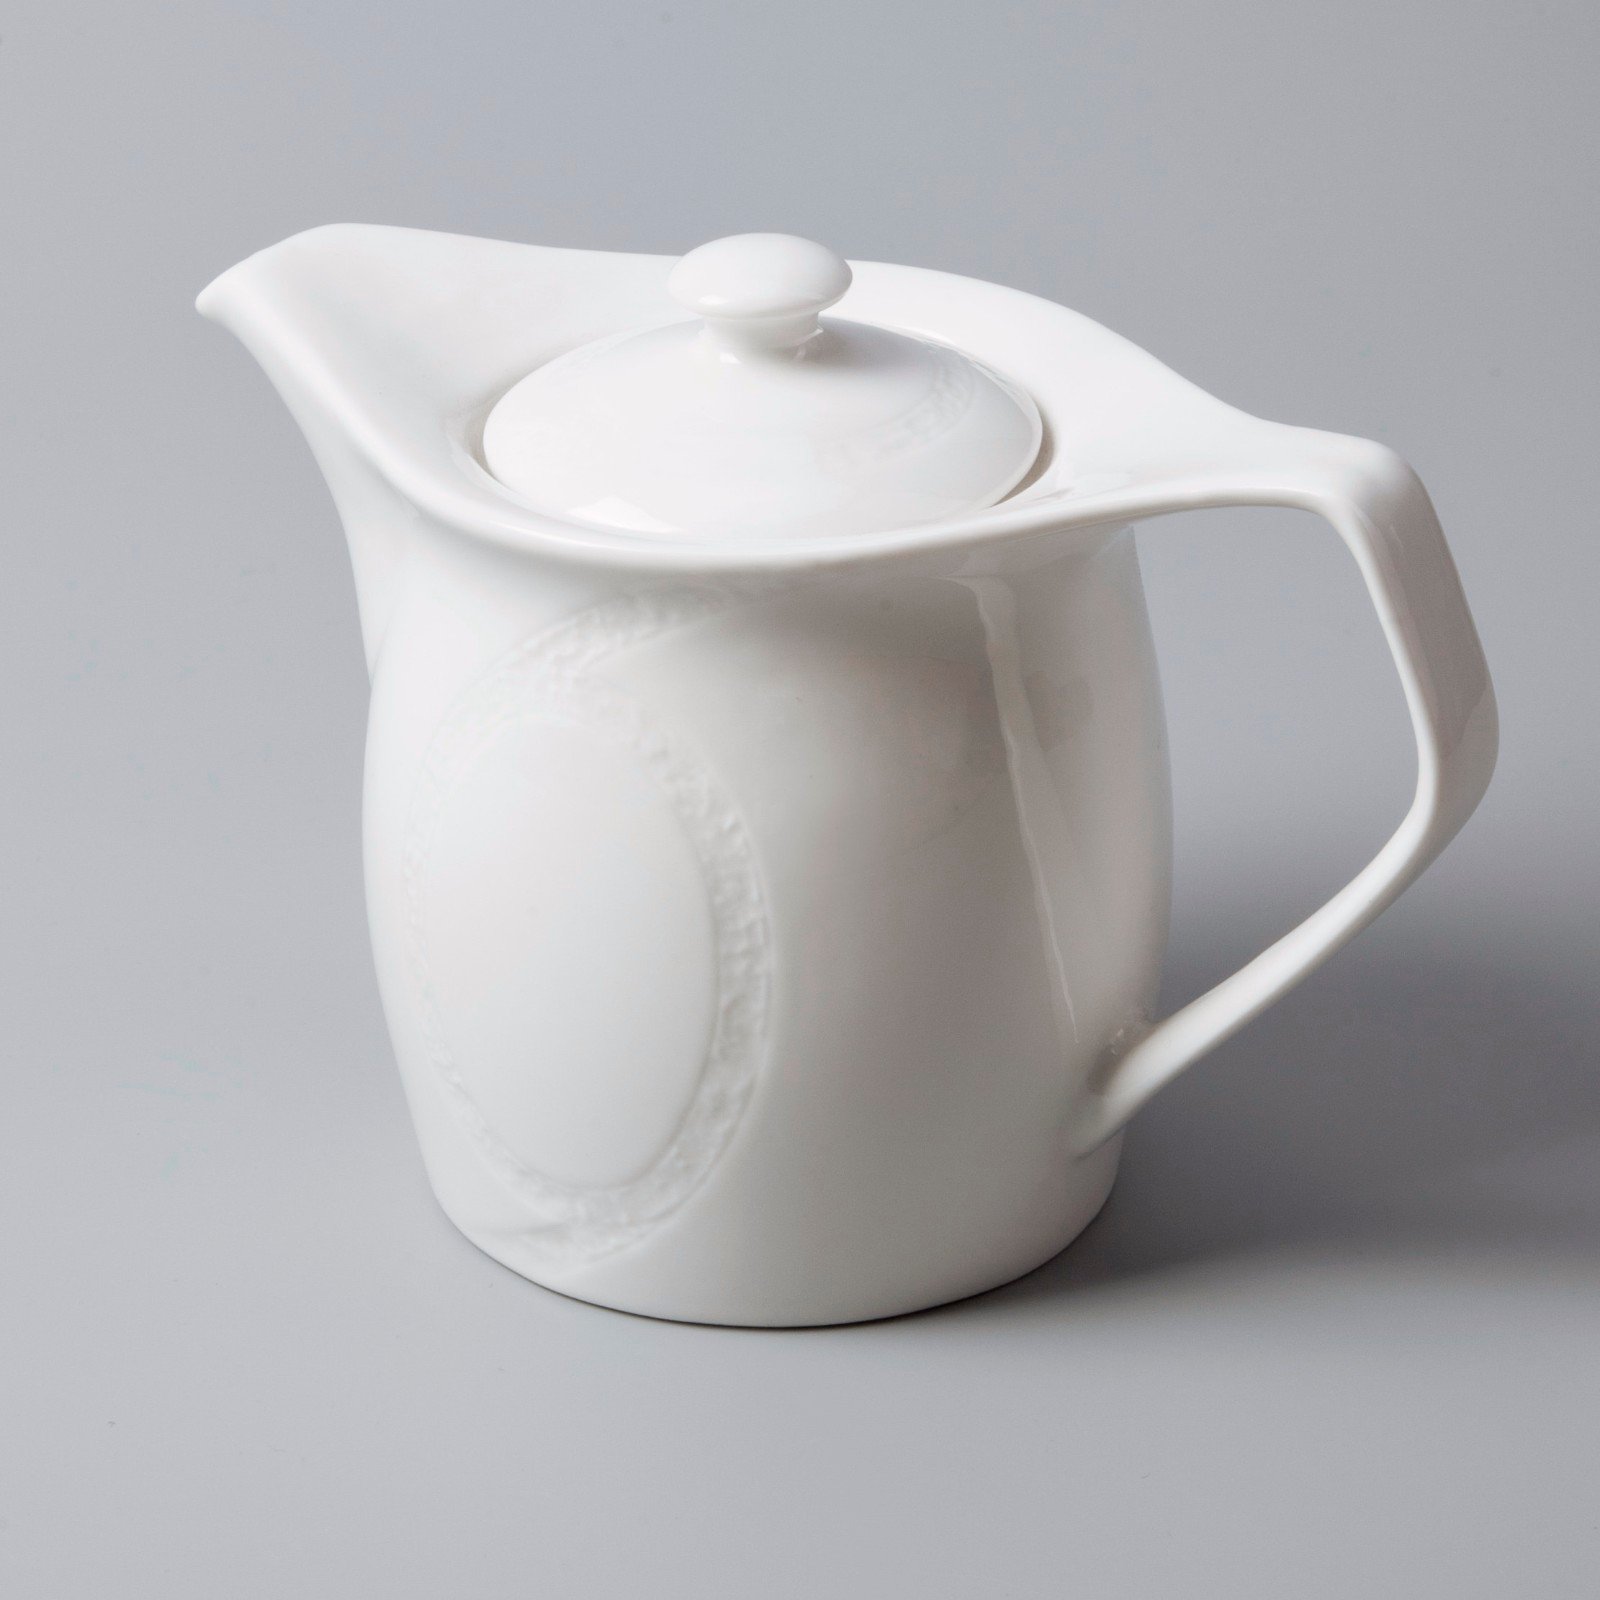 Latest best porcelain dinnerware in the world manufacturers for restaurant-5